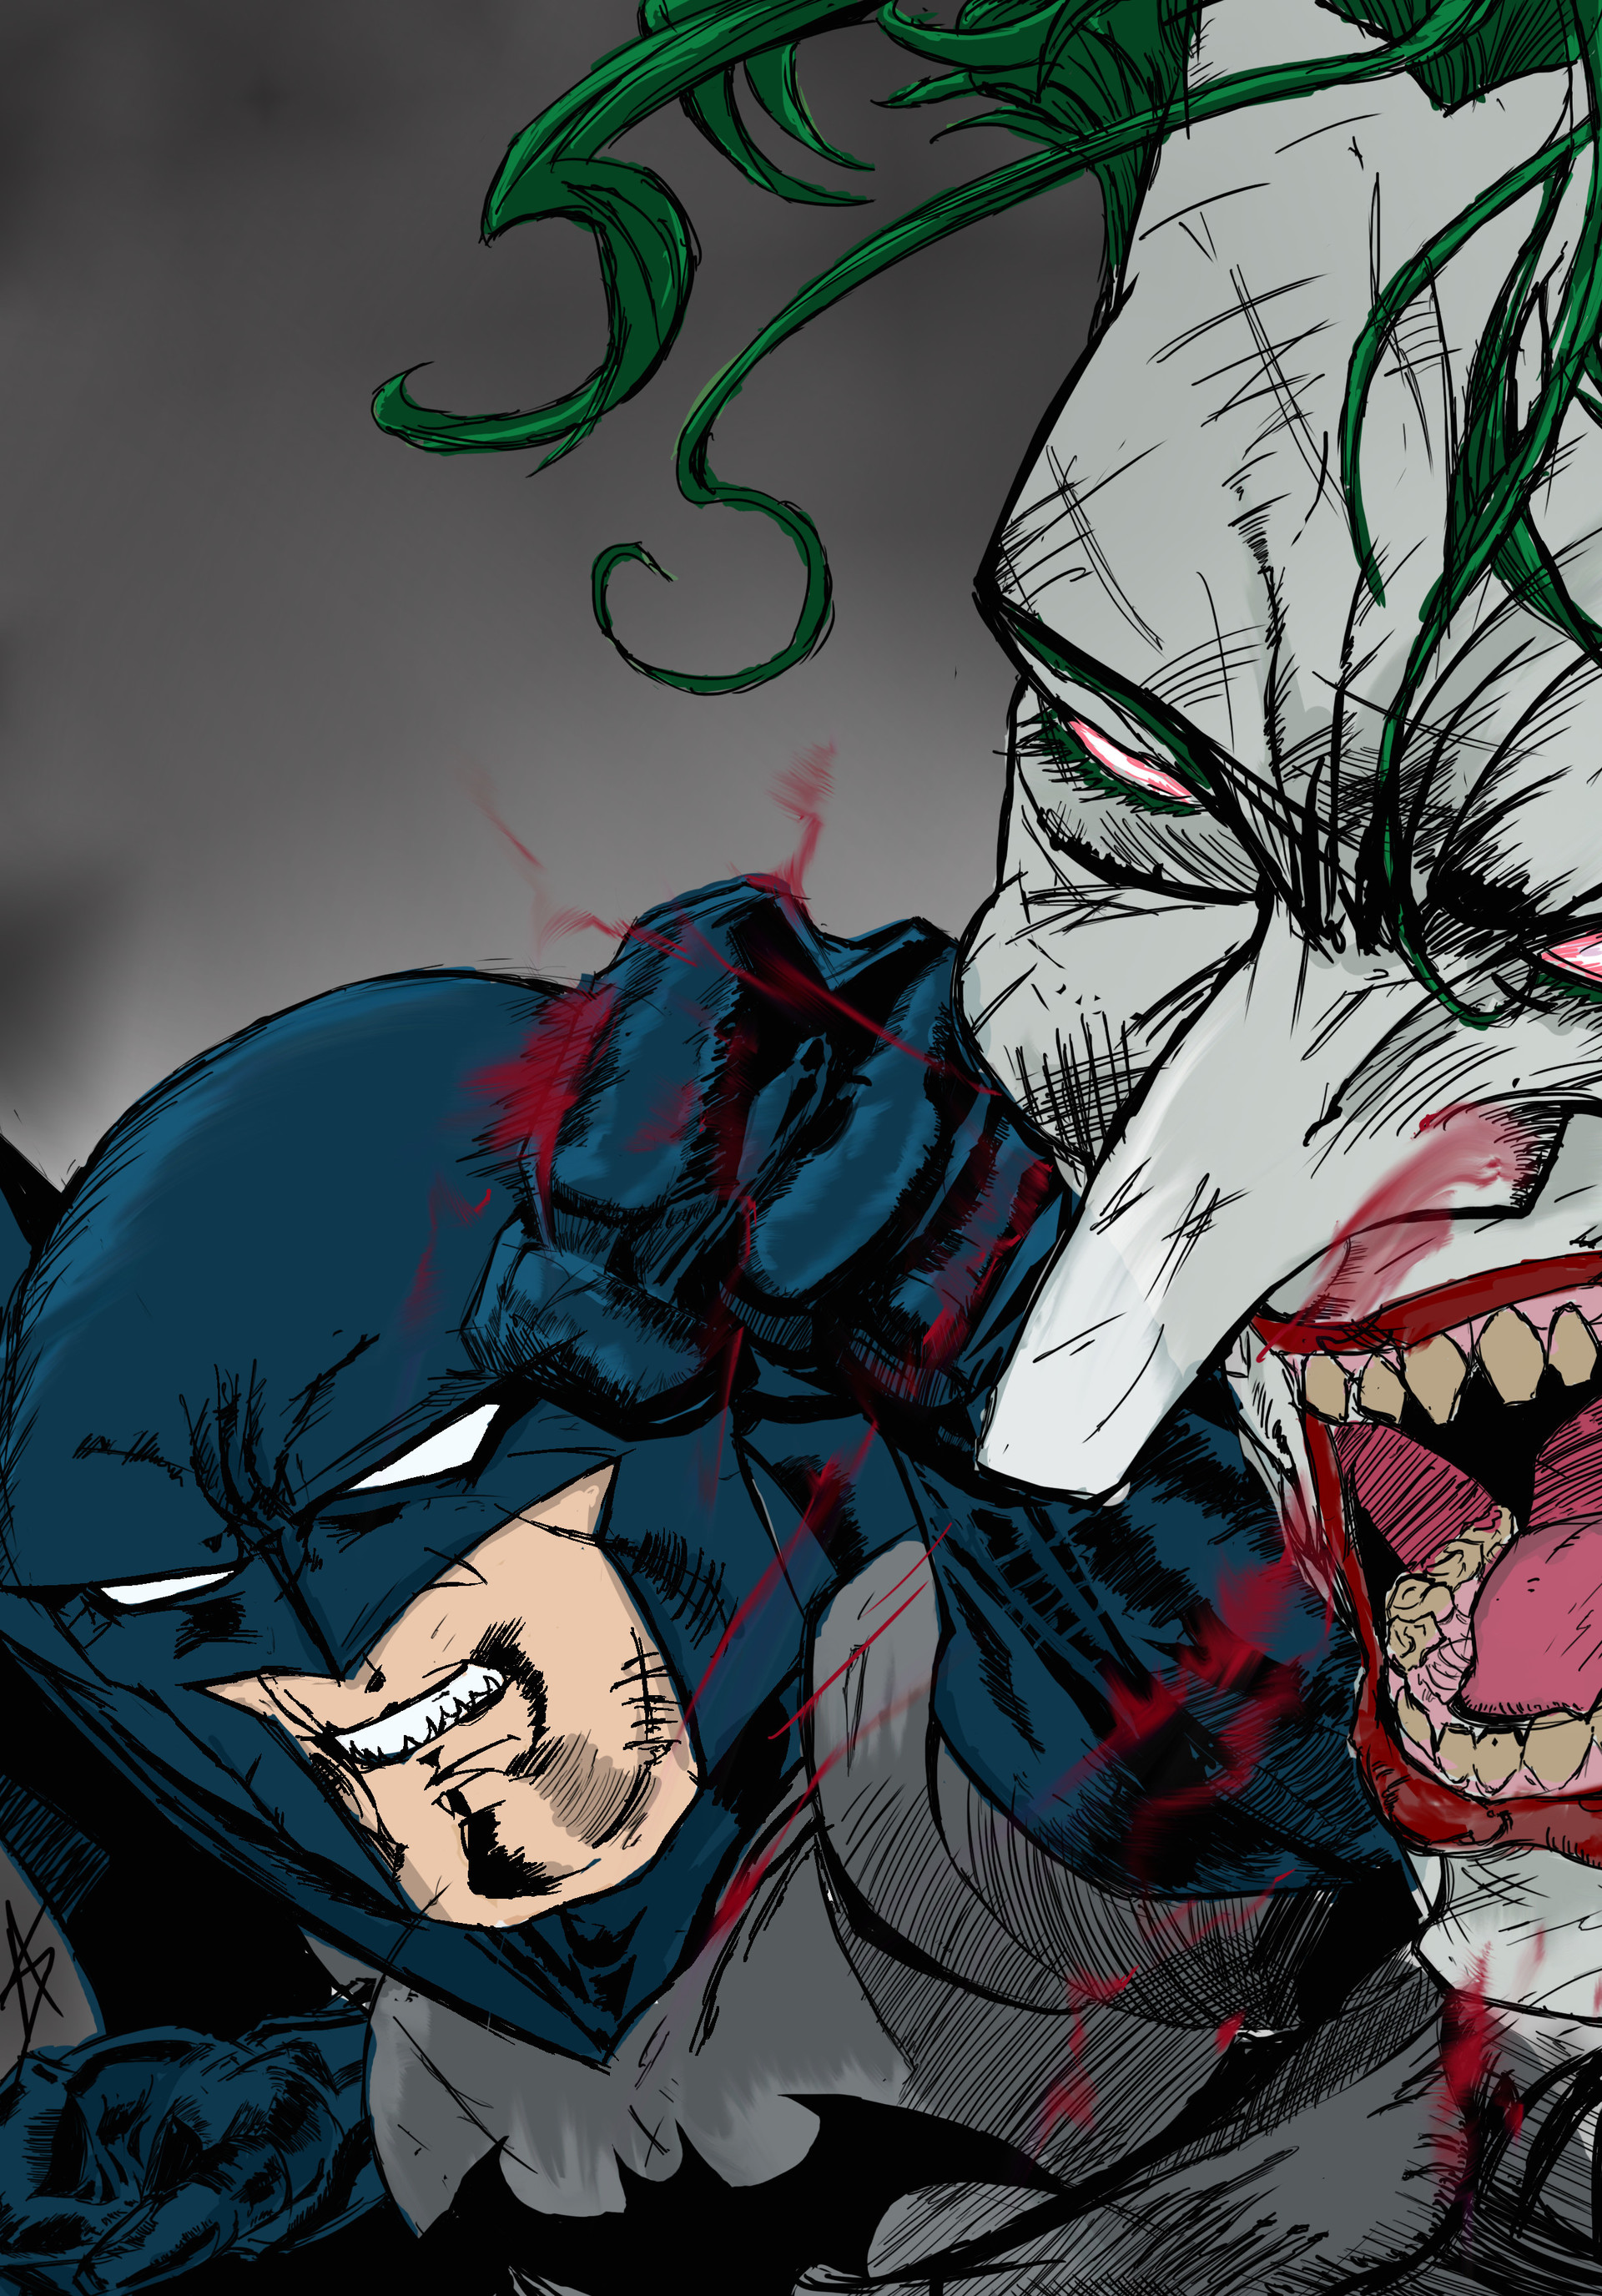 Batman Vs Joker Drawing at PaintingValley.com | Explore collection of ...